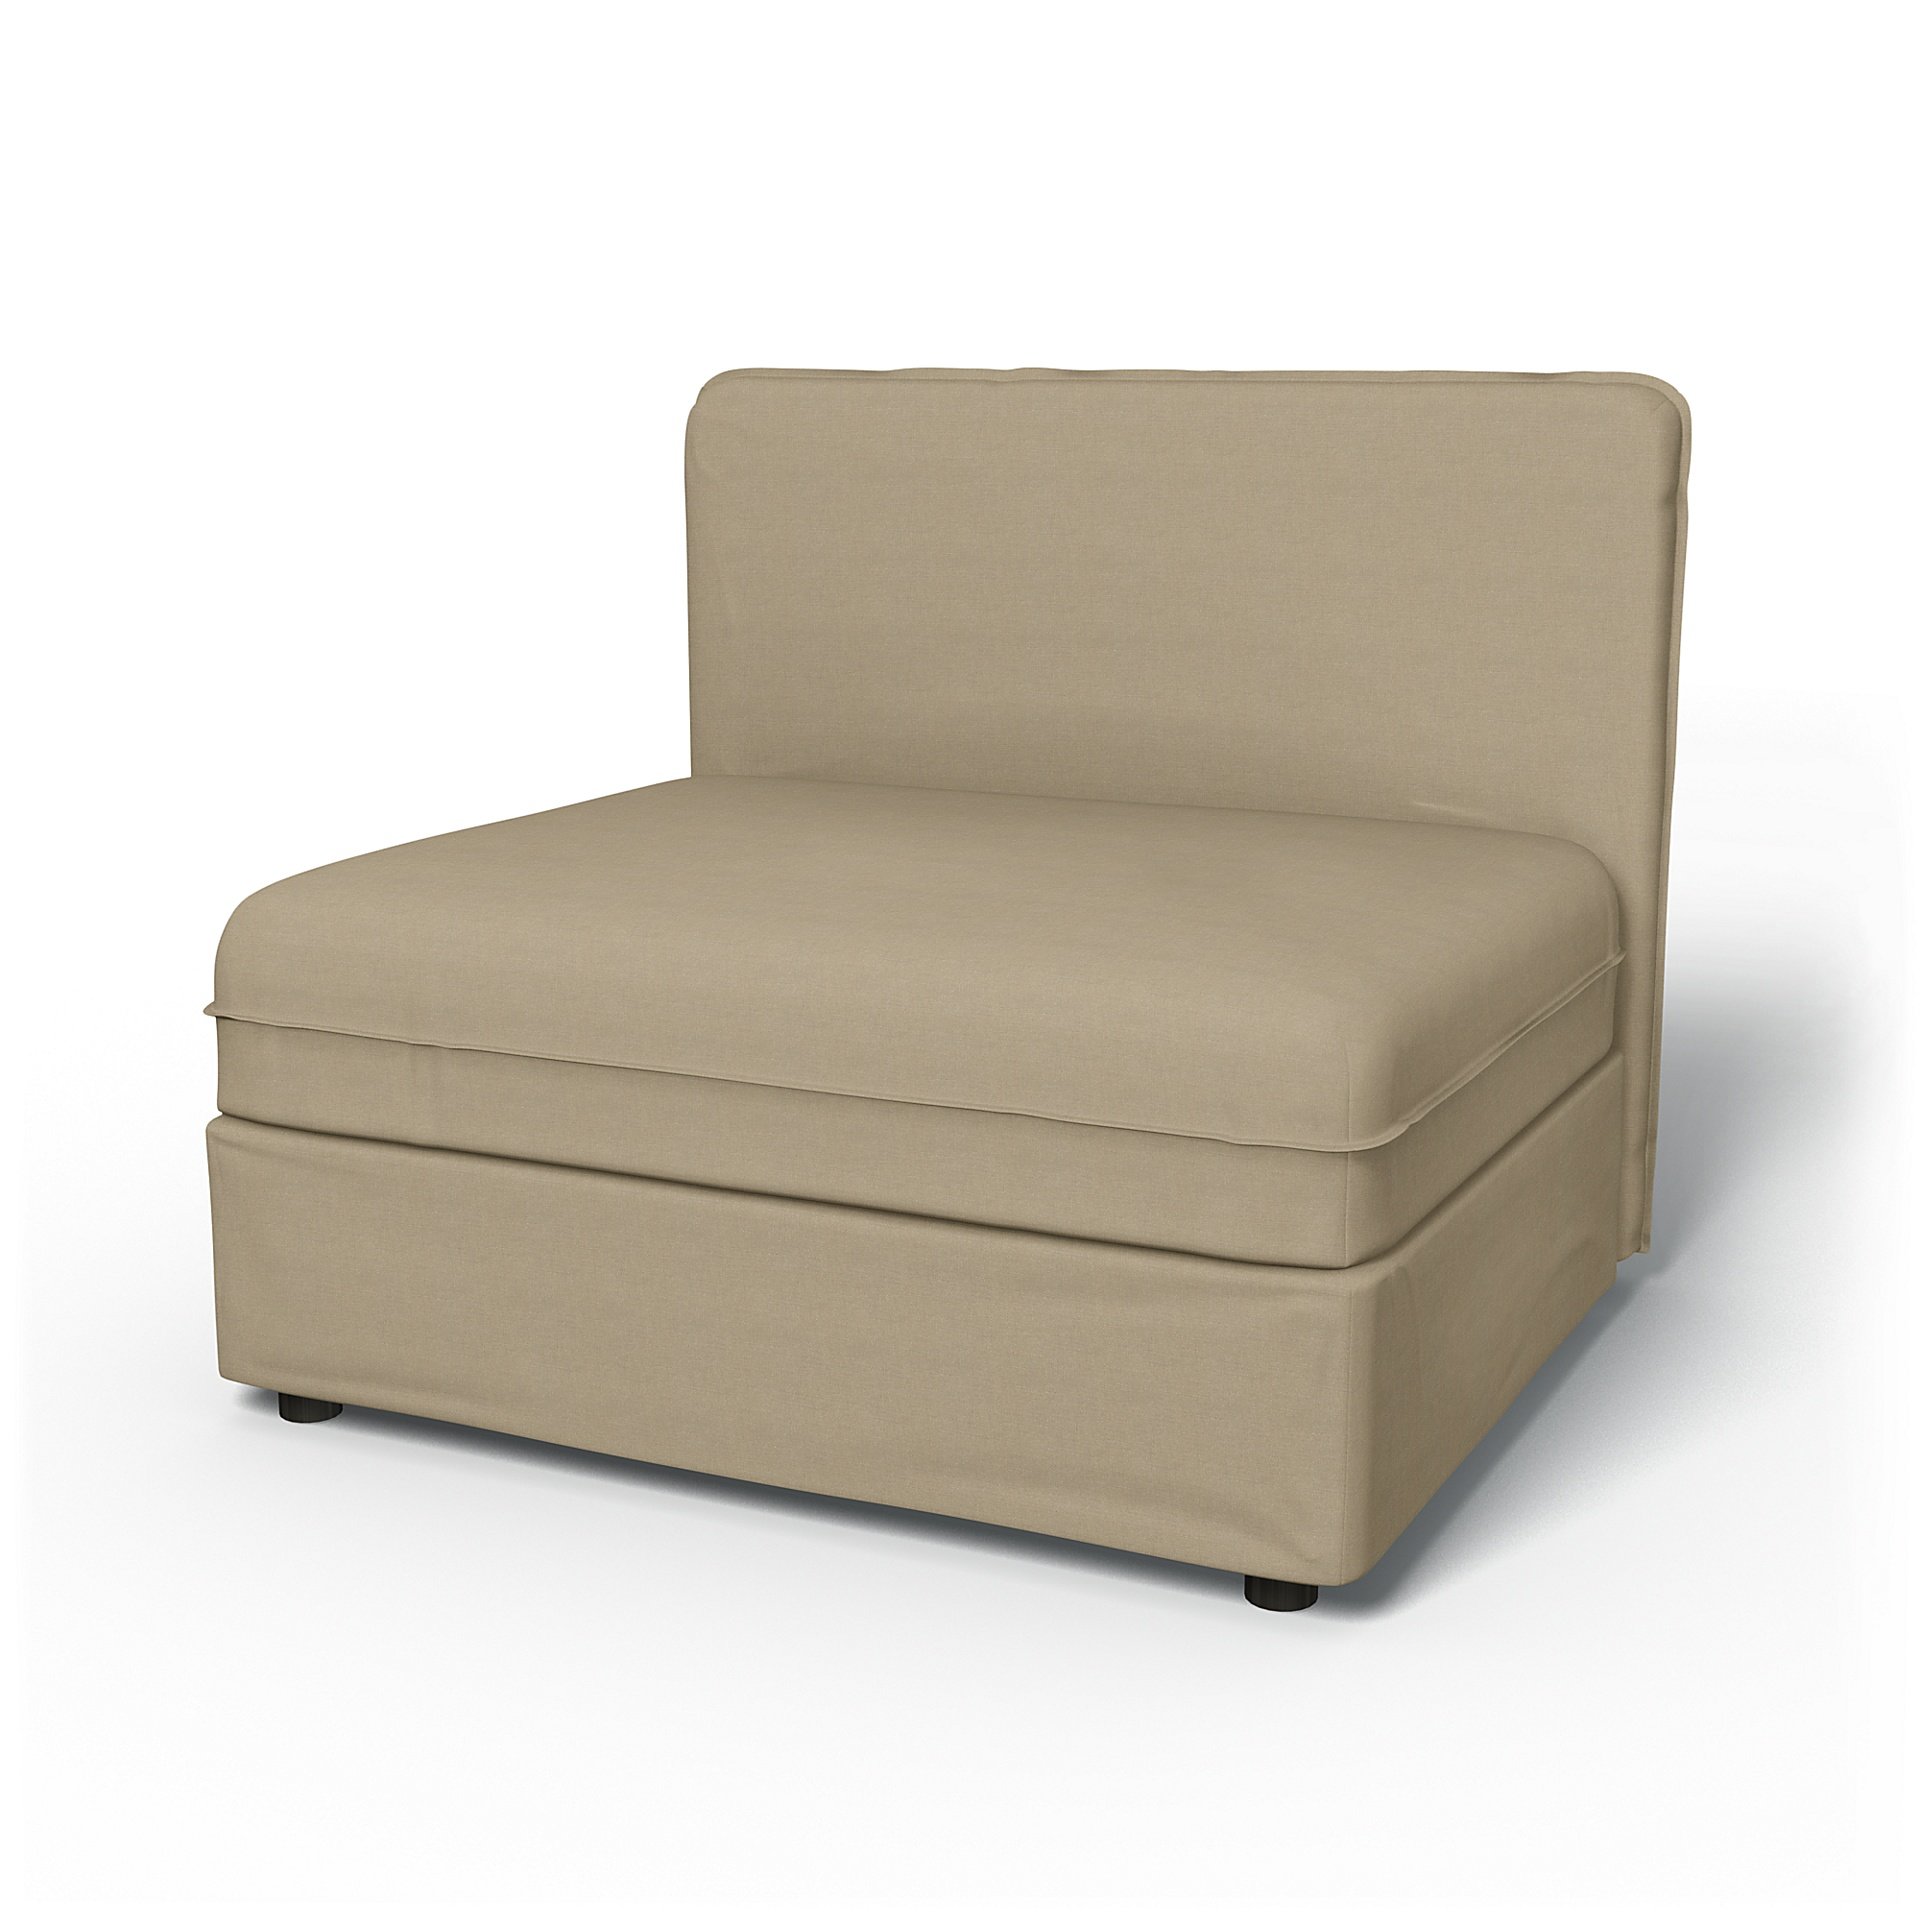 IKEA - Vallentuna Seat Module with Low Back Cover 100x80cm 39x32in, Tan, Linen - Bemz